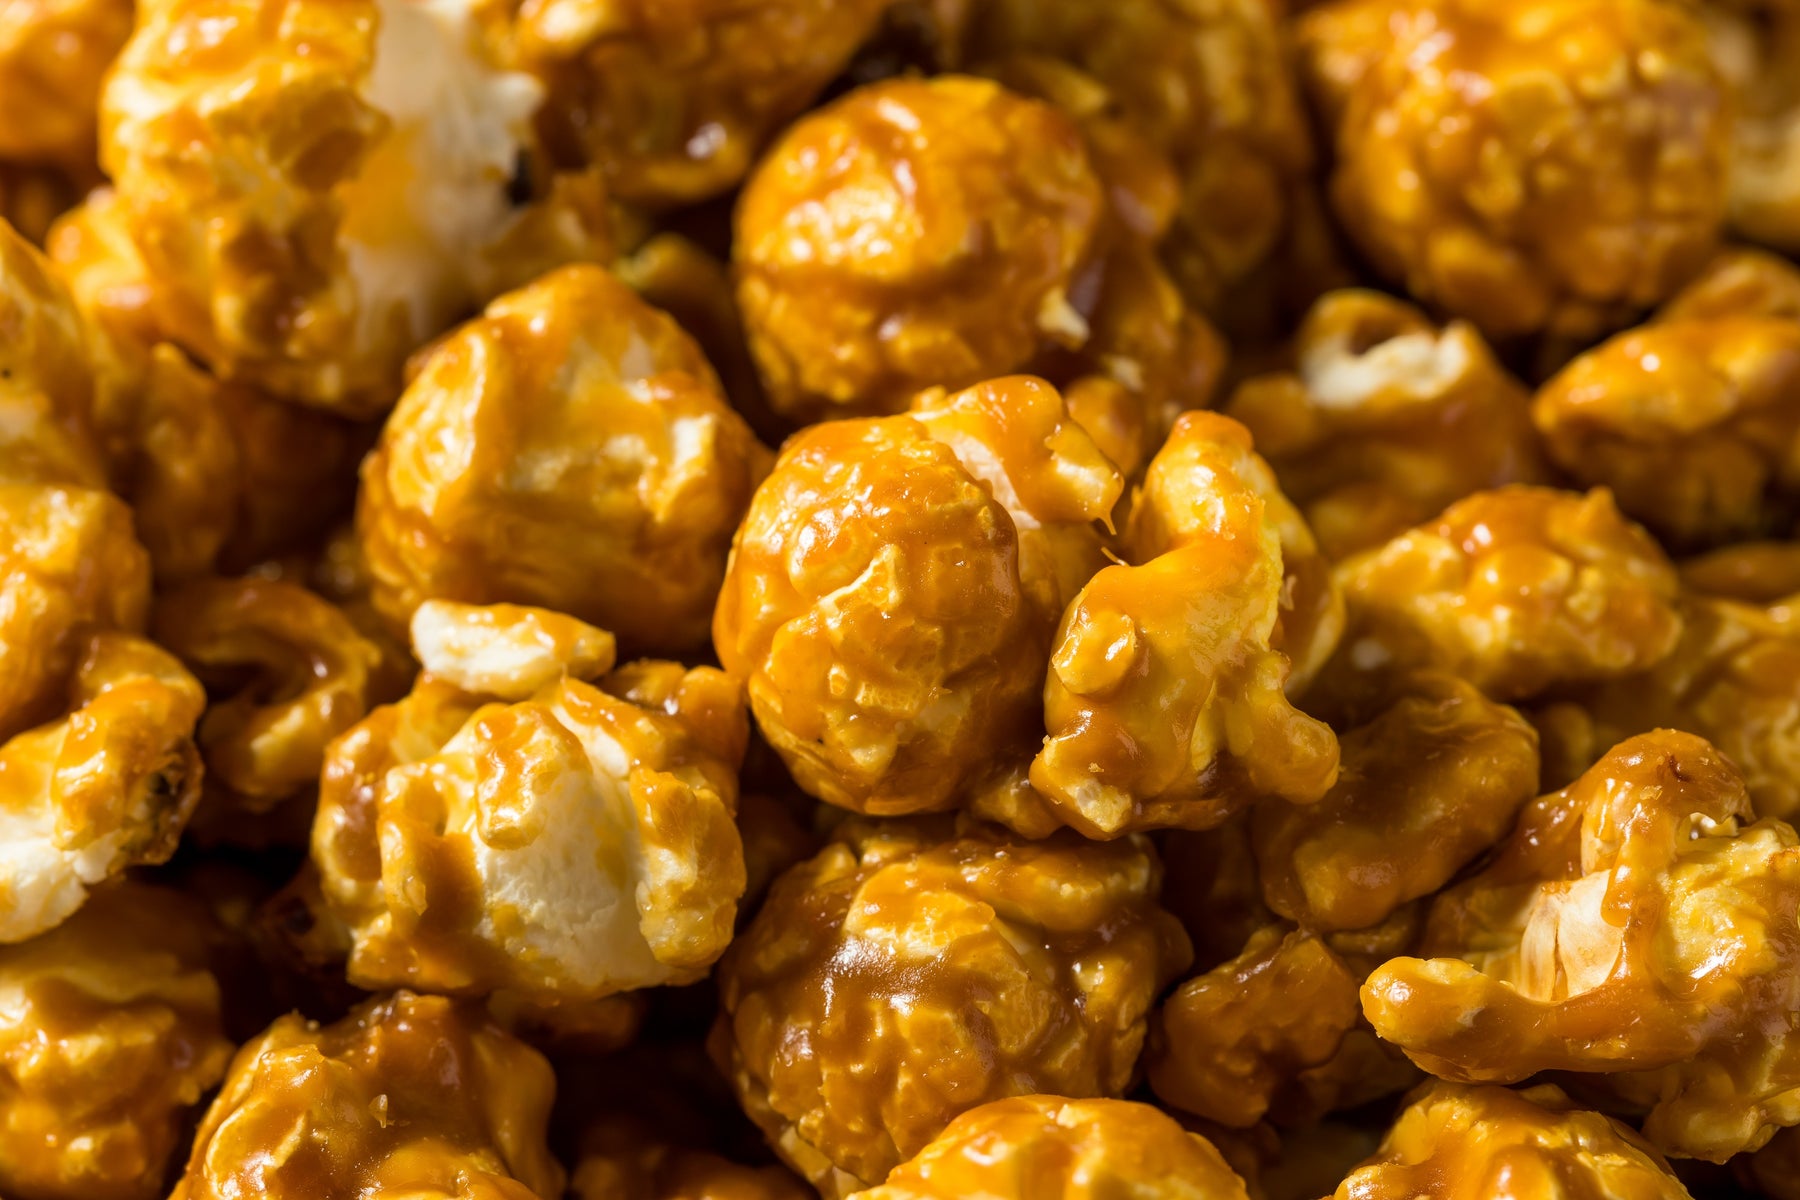 How to Make Homemade Caramel Popcorn